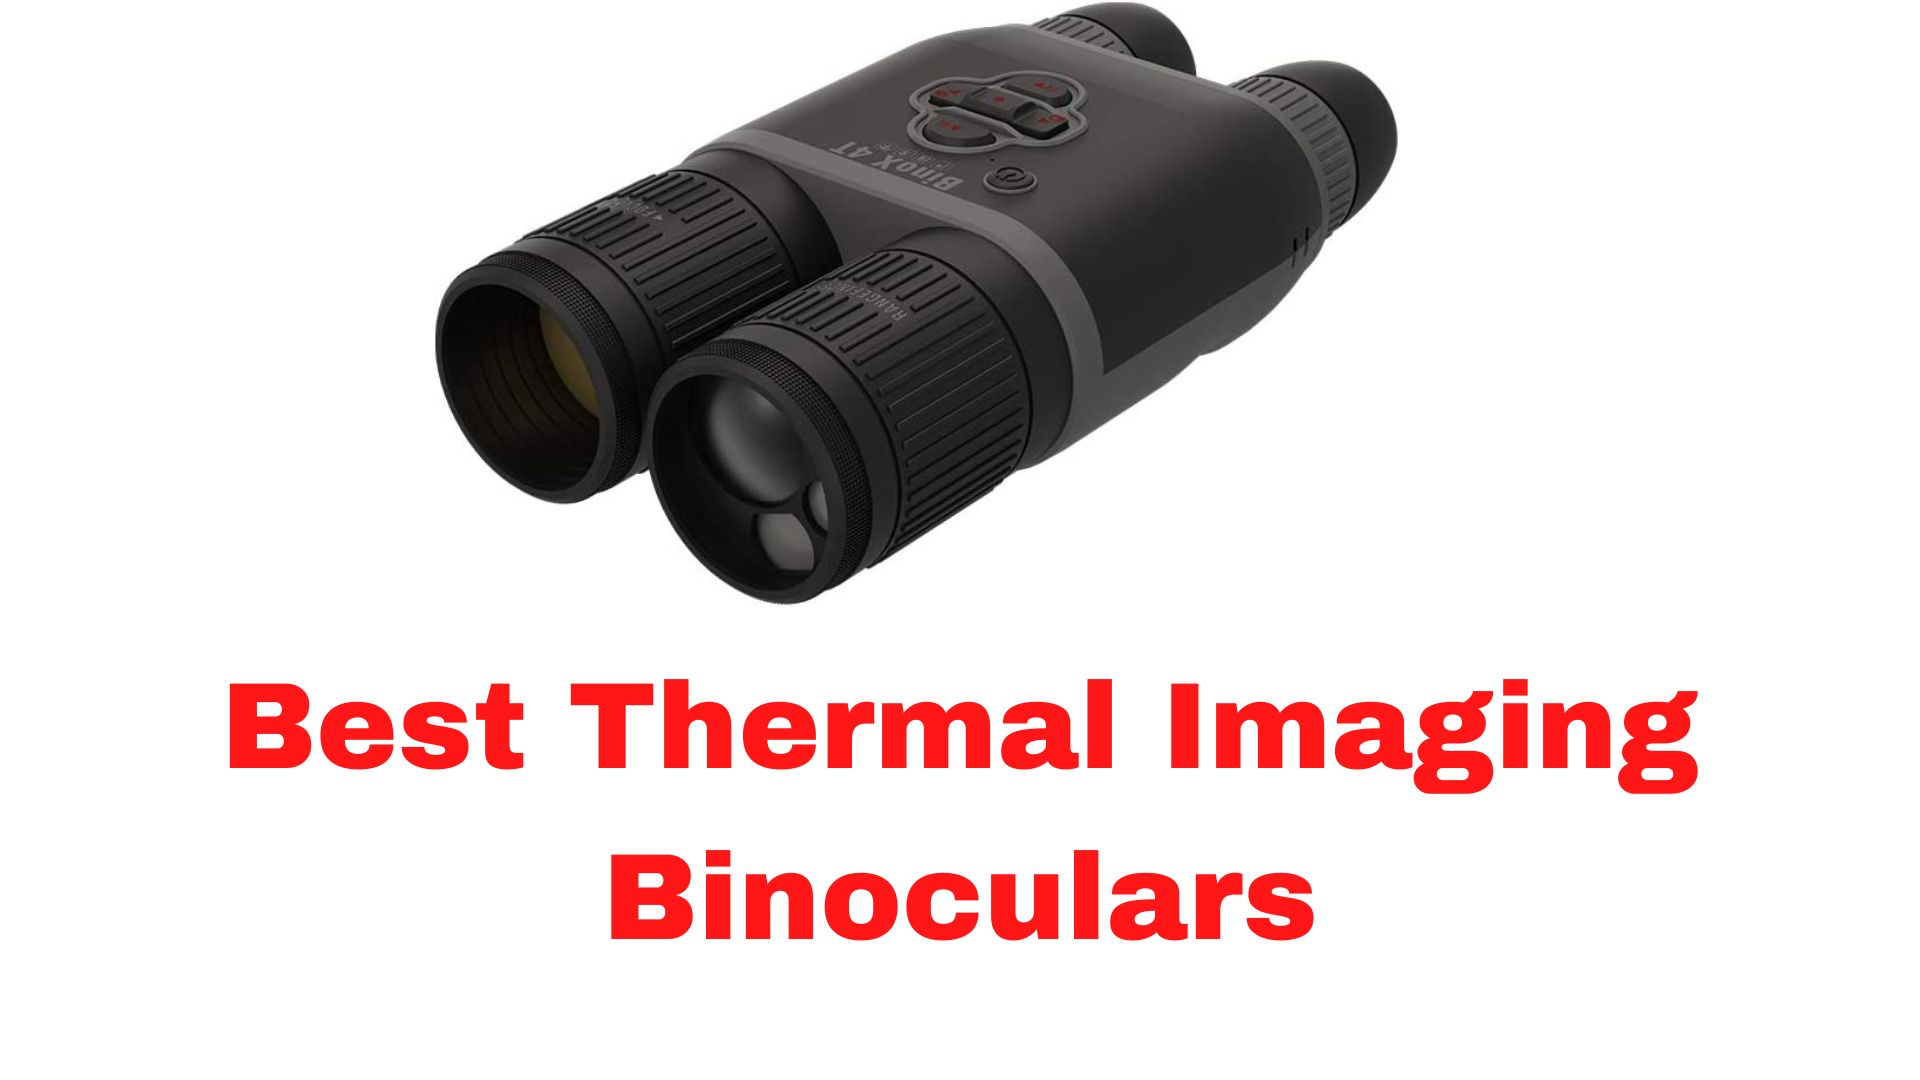 Best Thermal Imaging Binoculars